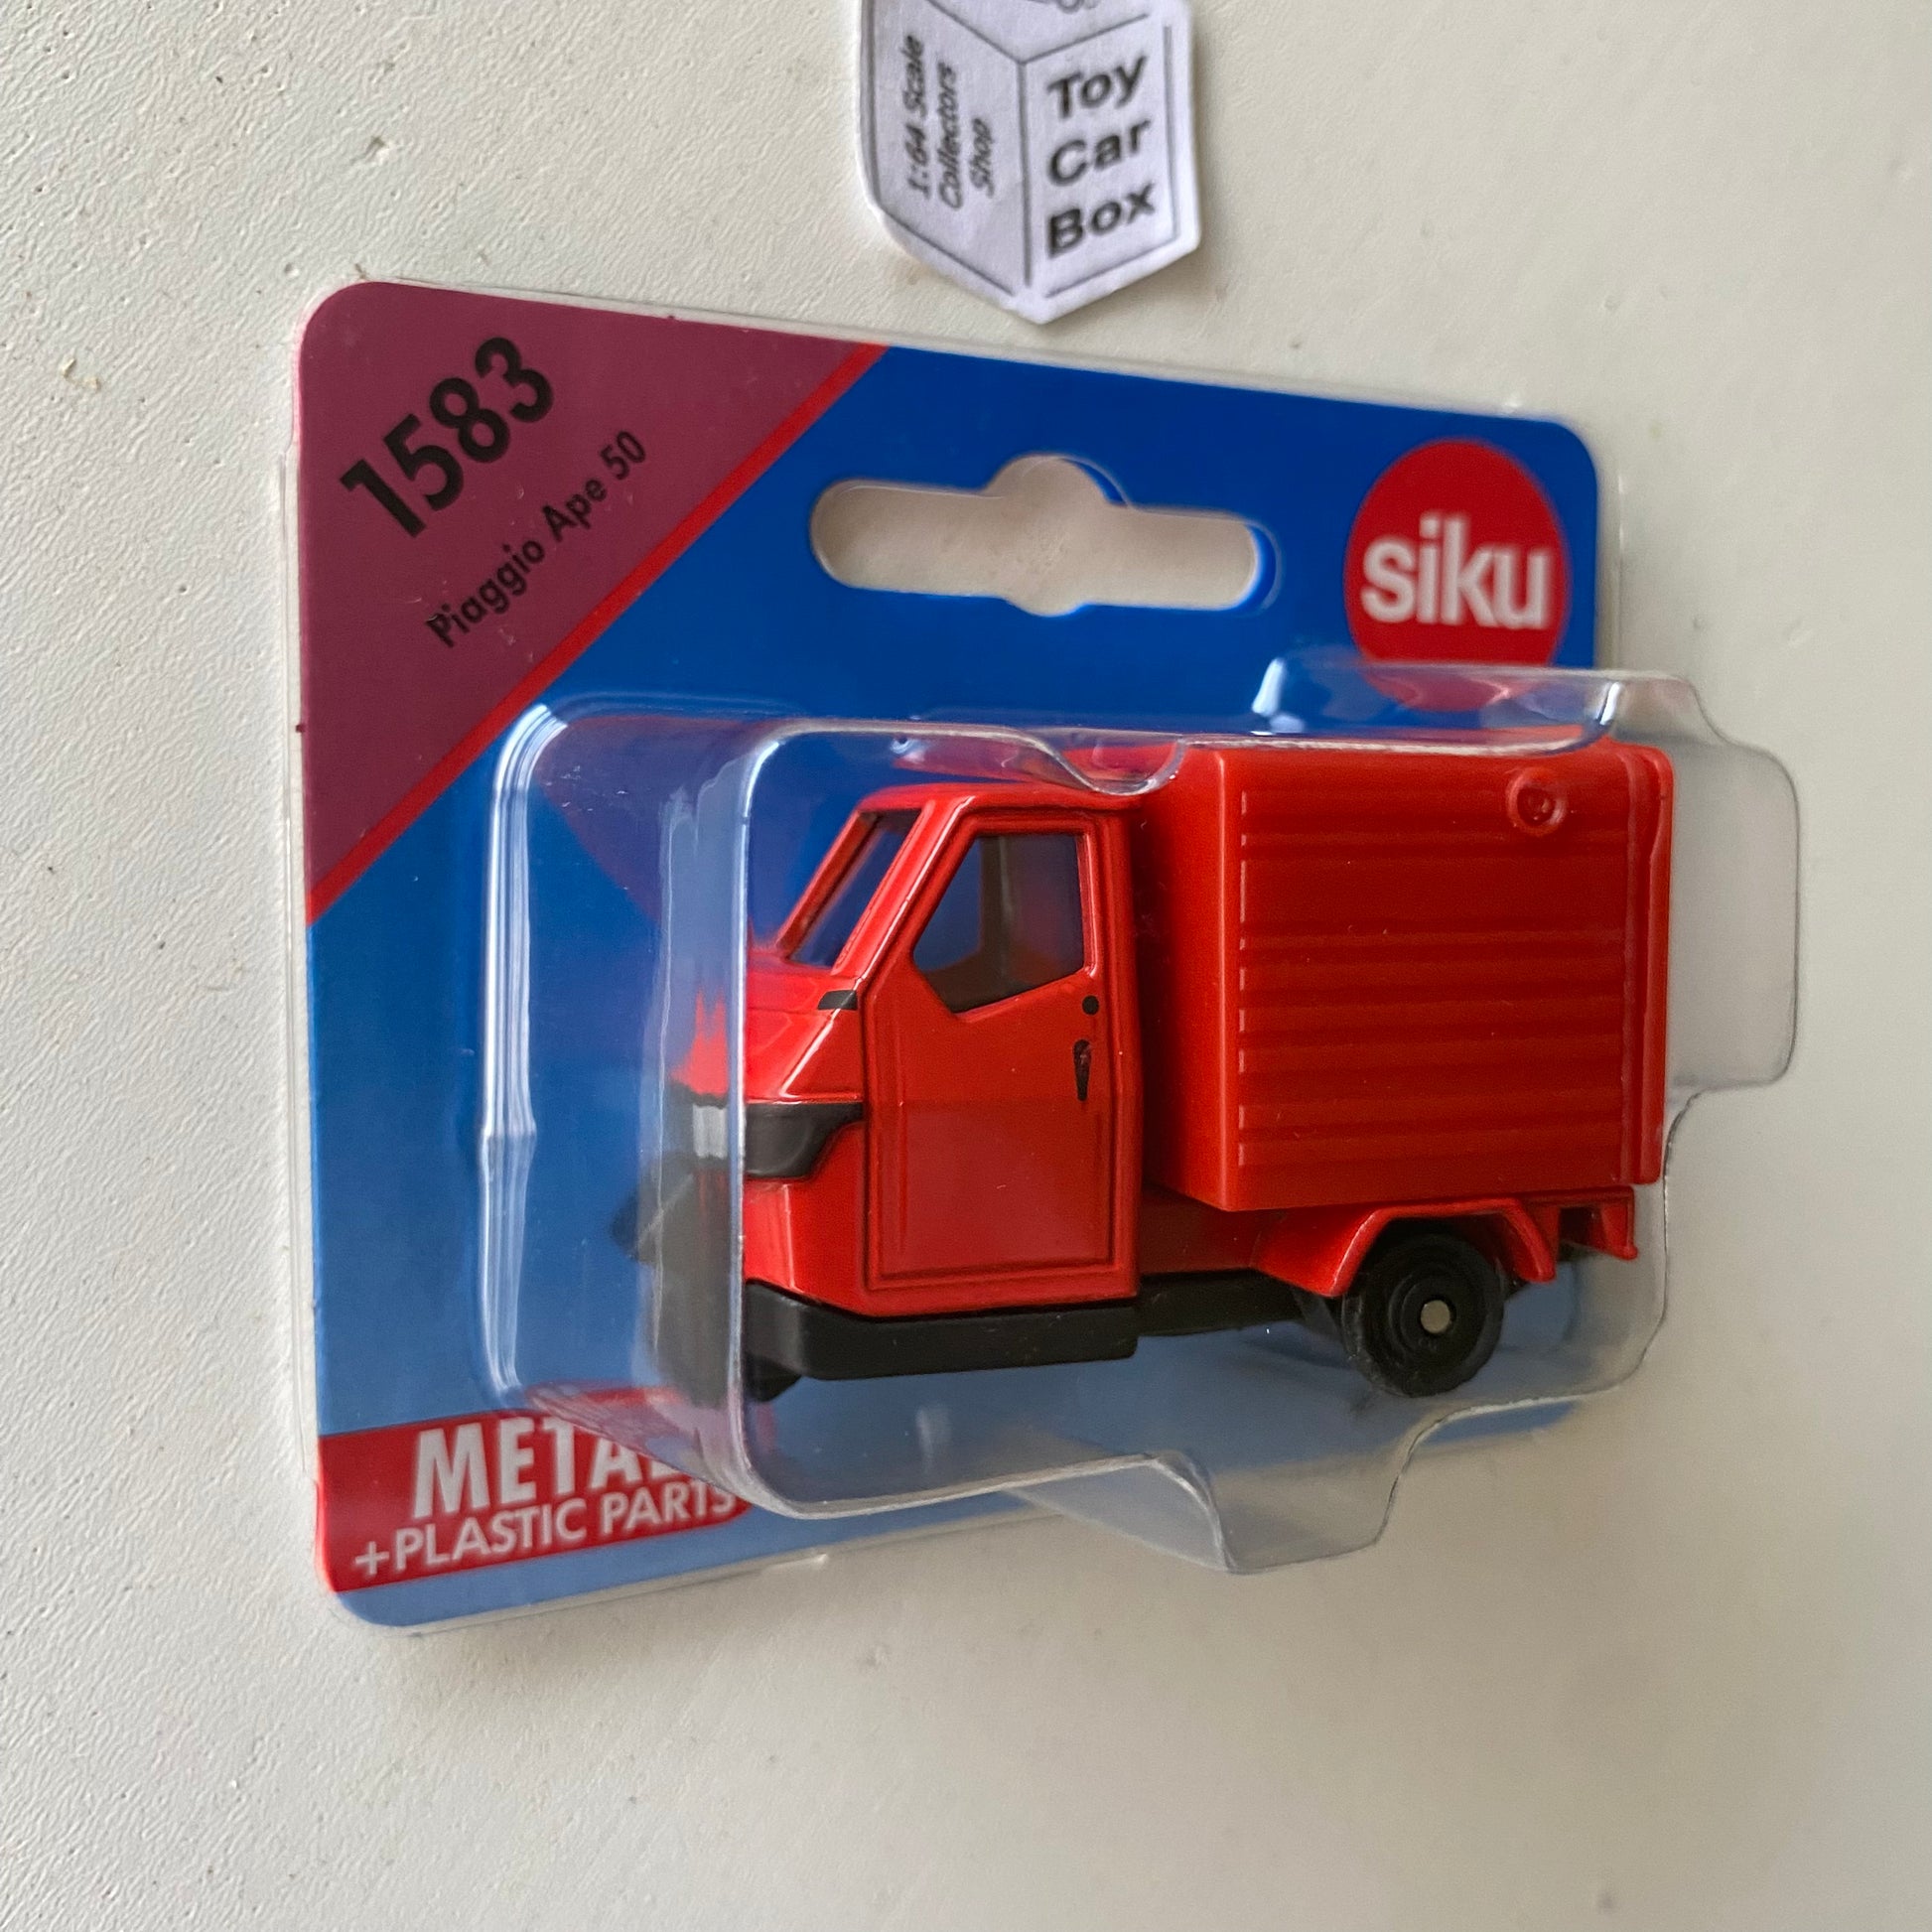 SIKU #1583 - Piaggio Ape 50 (Red, Opening Rear - Approx. 1:44 scale) E –  Toy Car Box